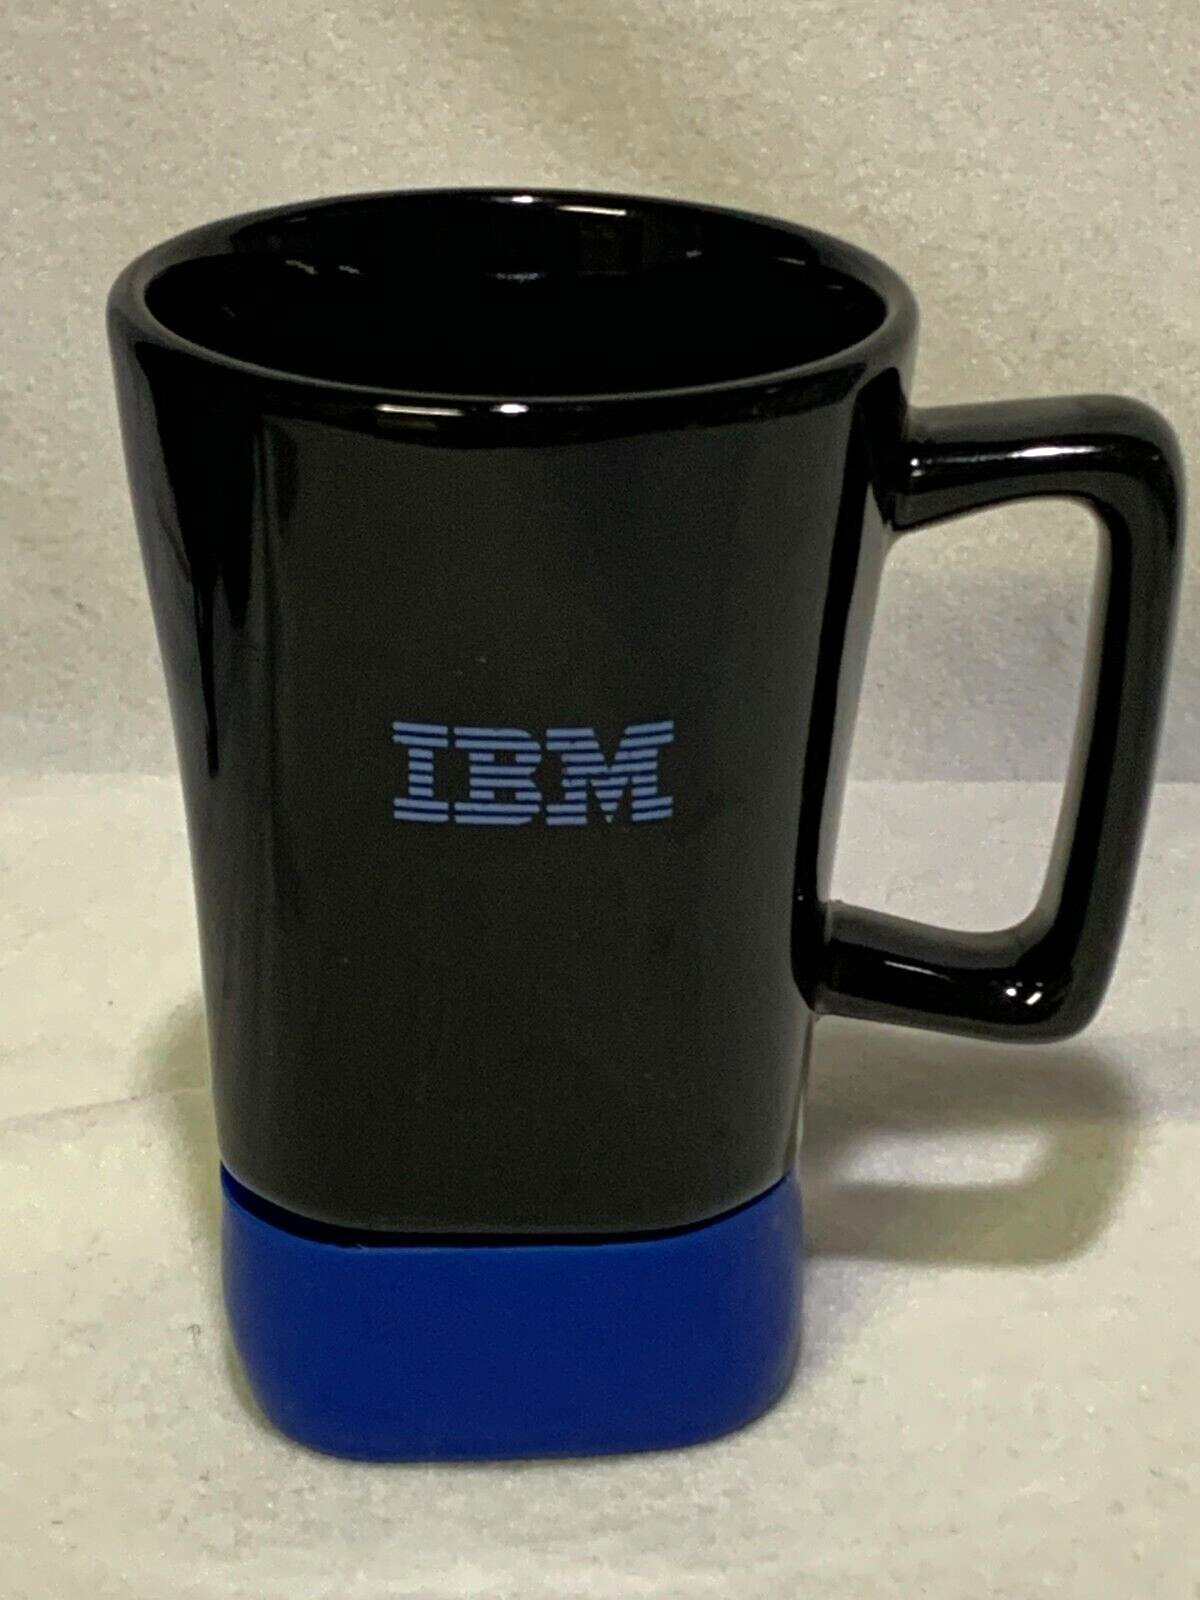 IBM Logo Large Black Ceramic Coffee Mug Blue Rubber Bottom Vintage Computer Cup